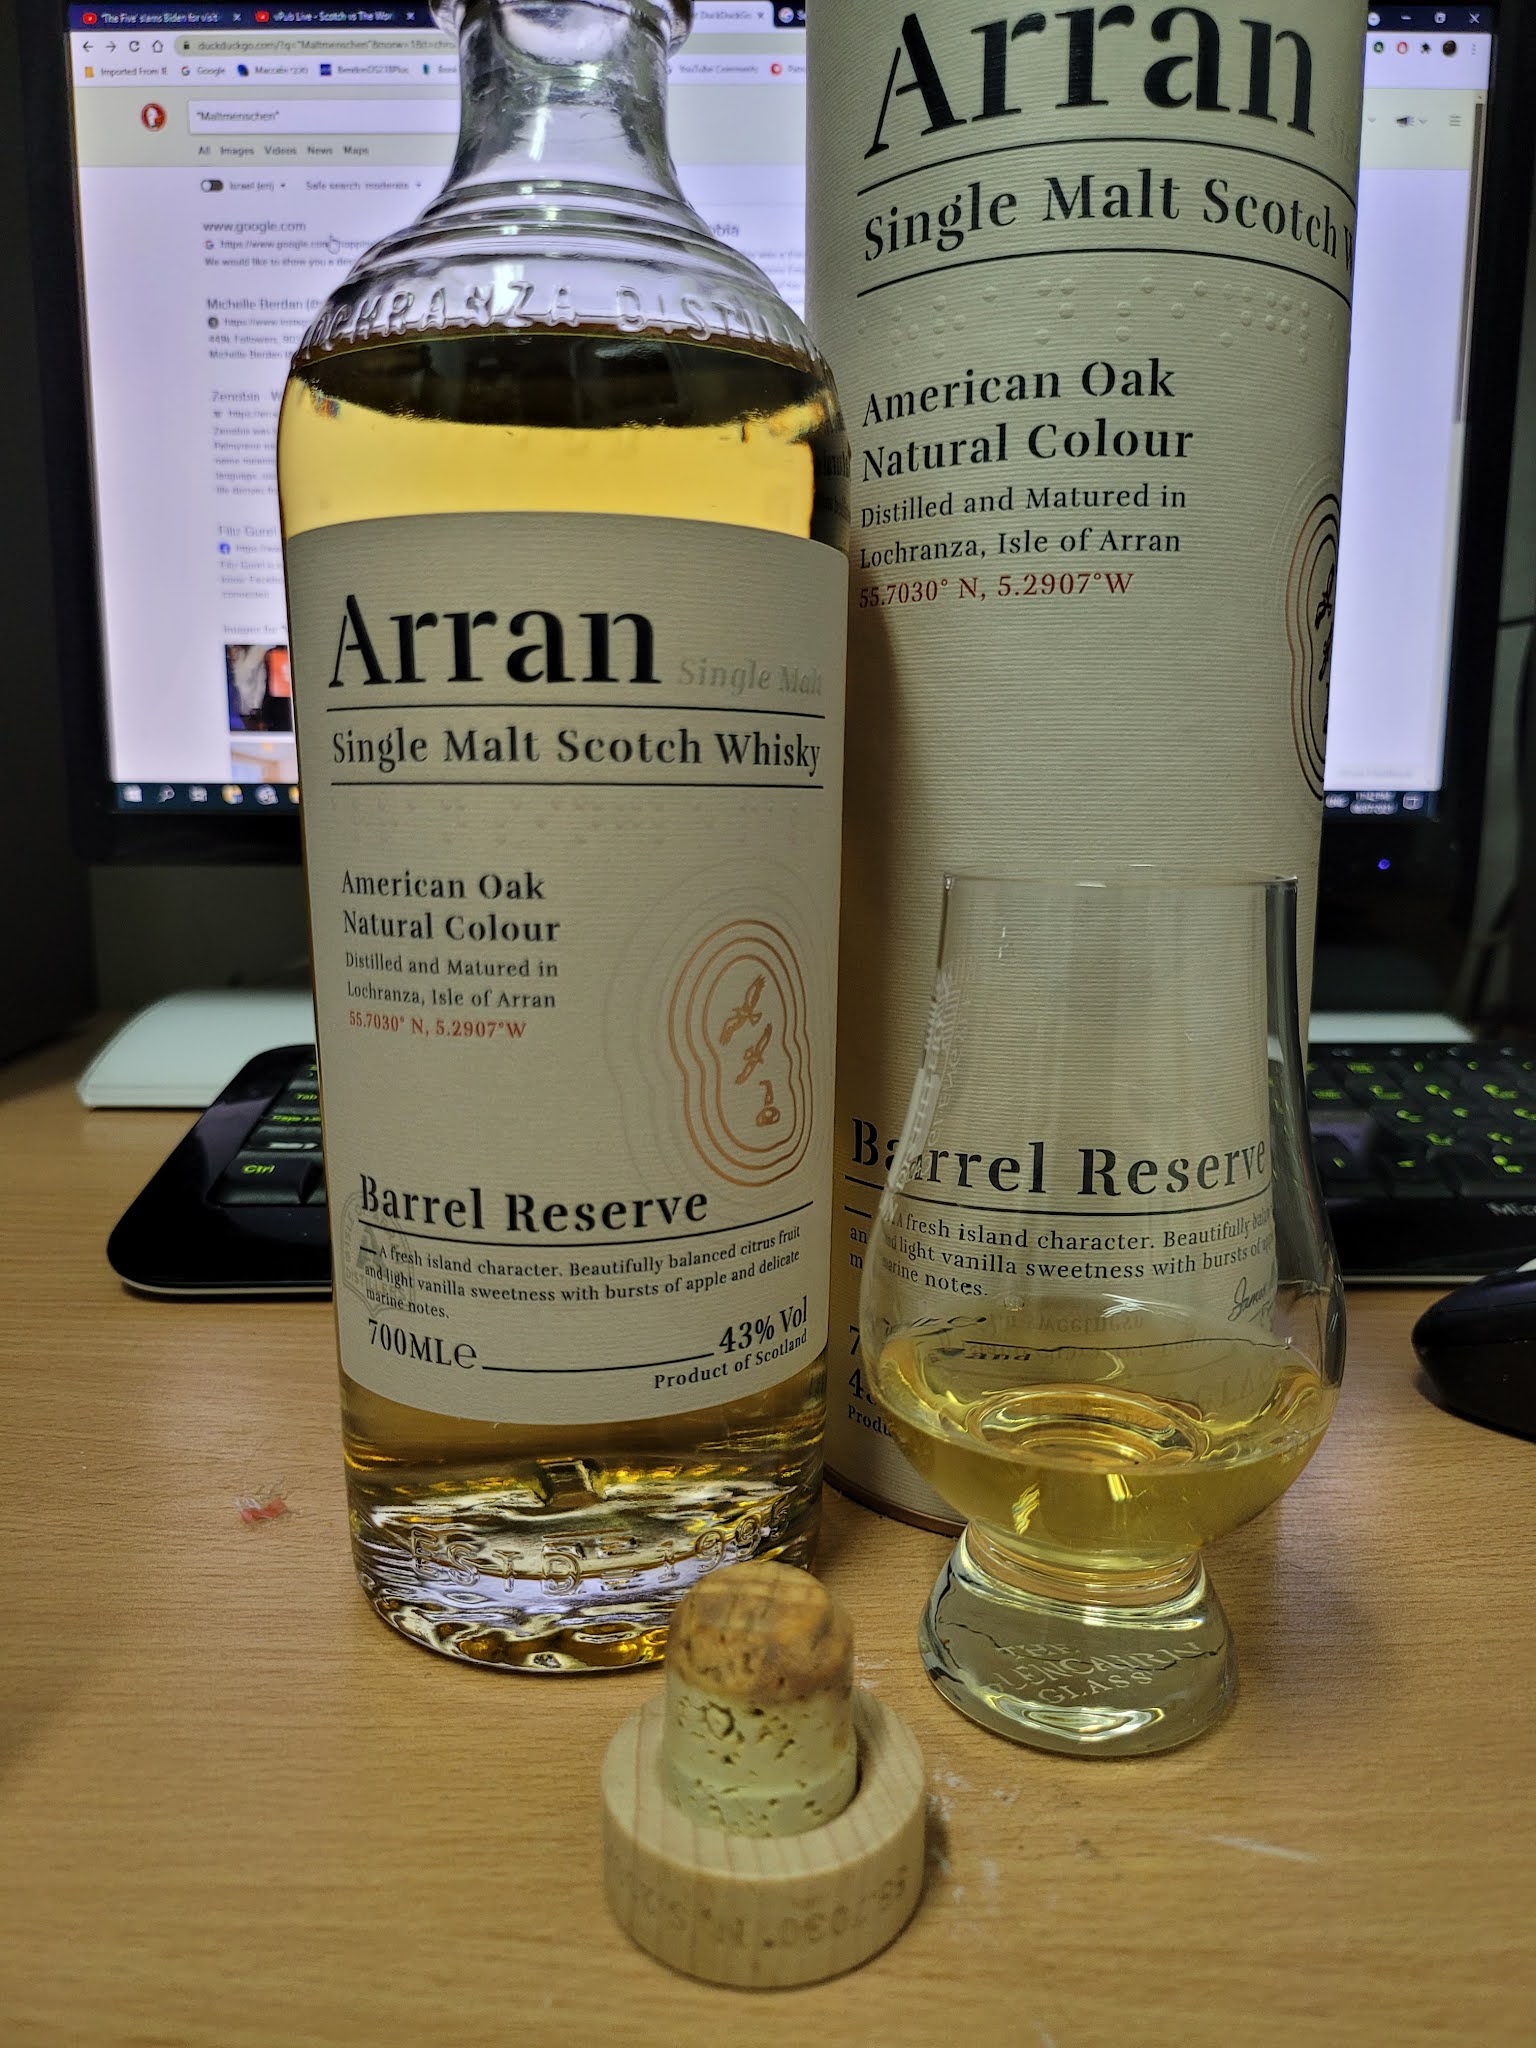 Arran Barrel Reserve Single Malt Scotch Whisky